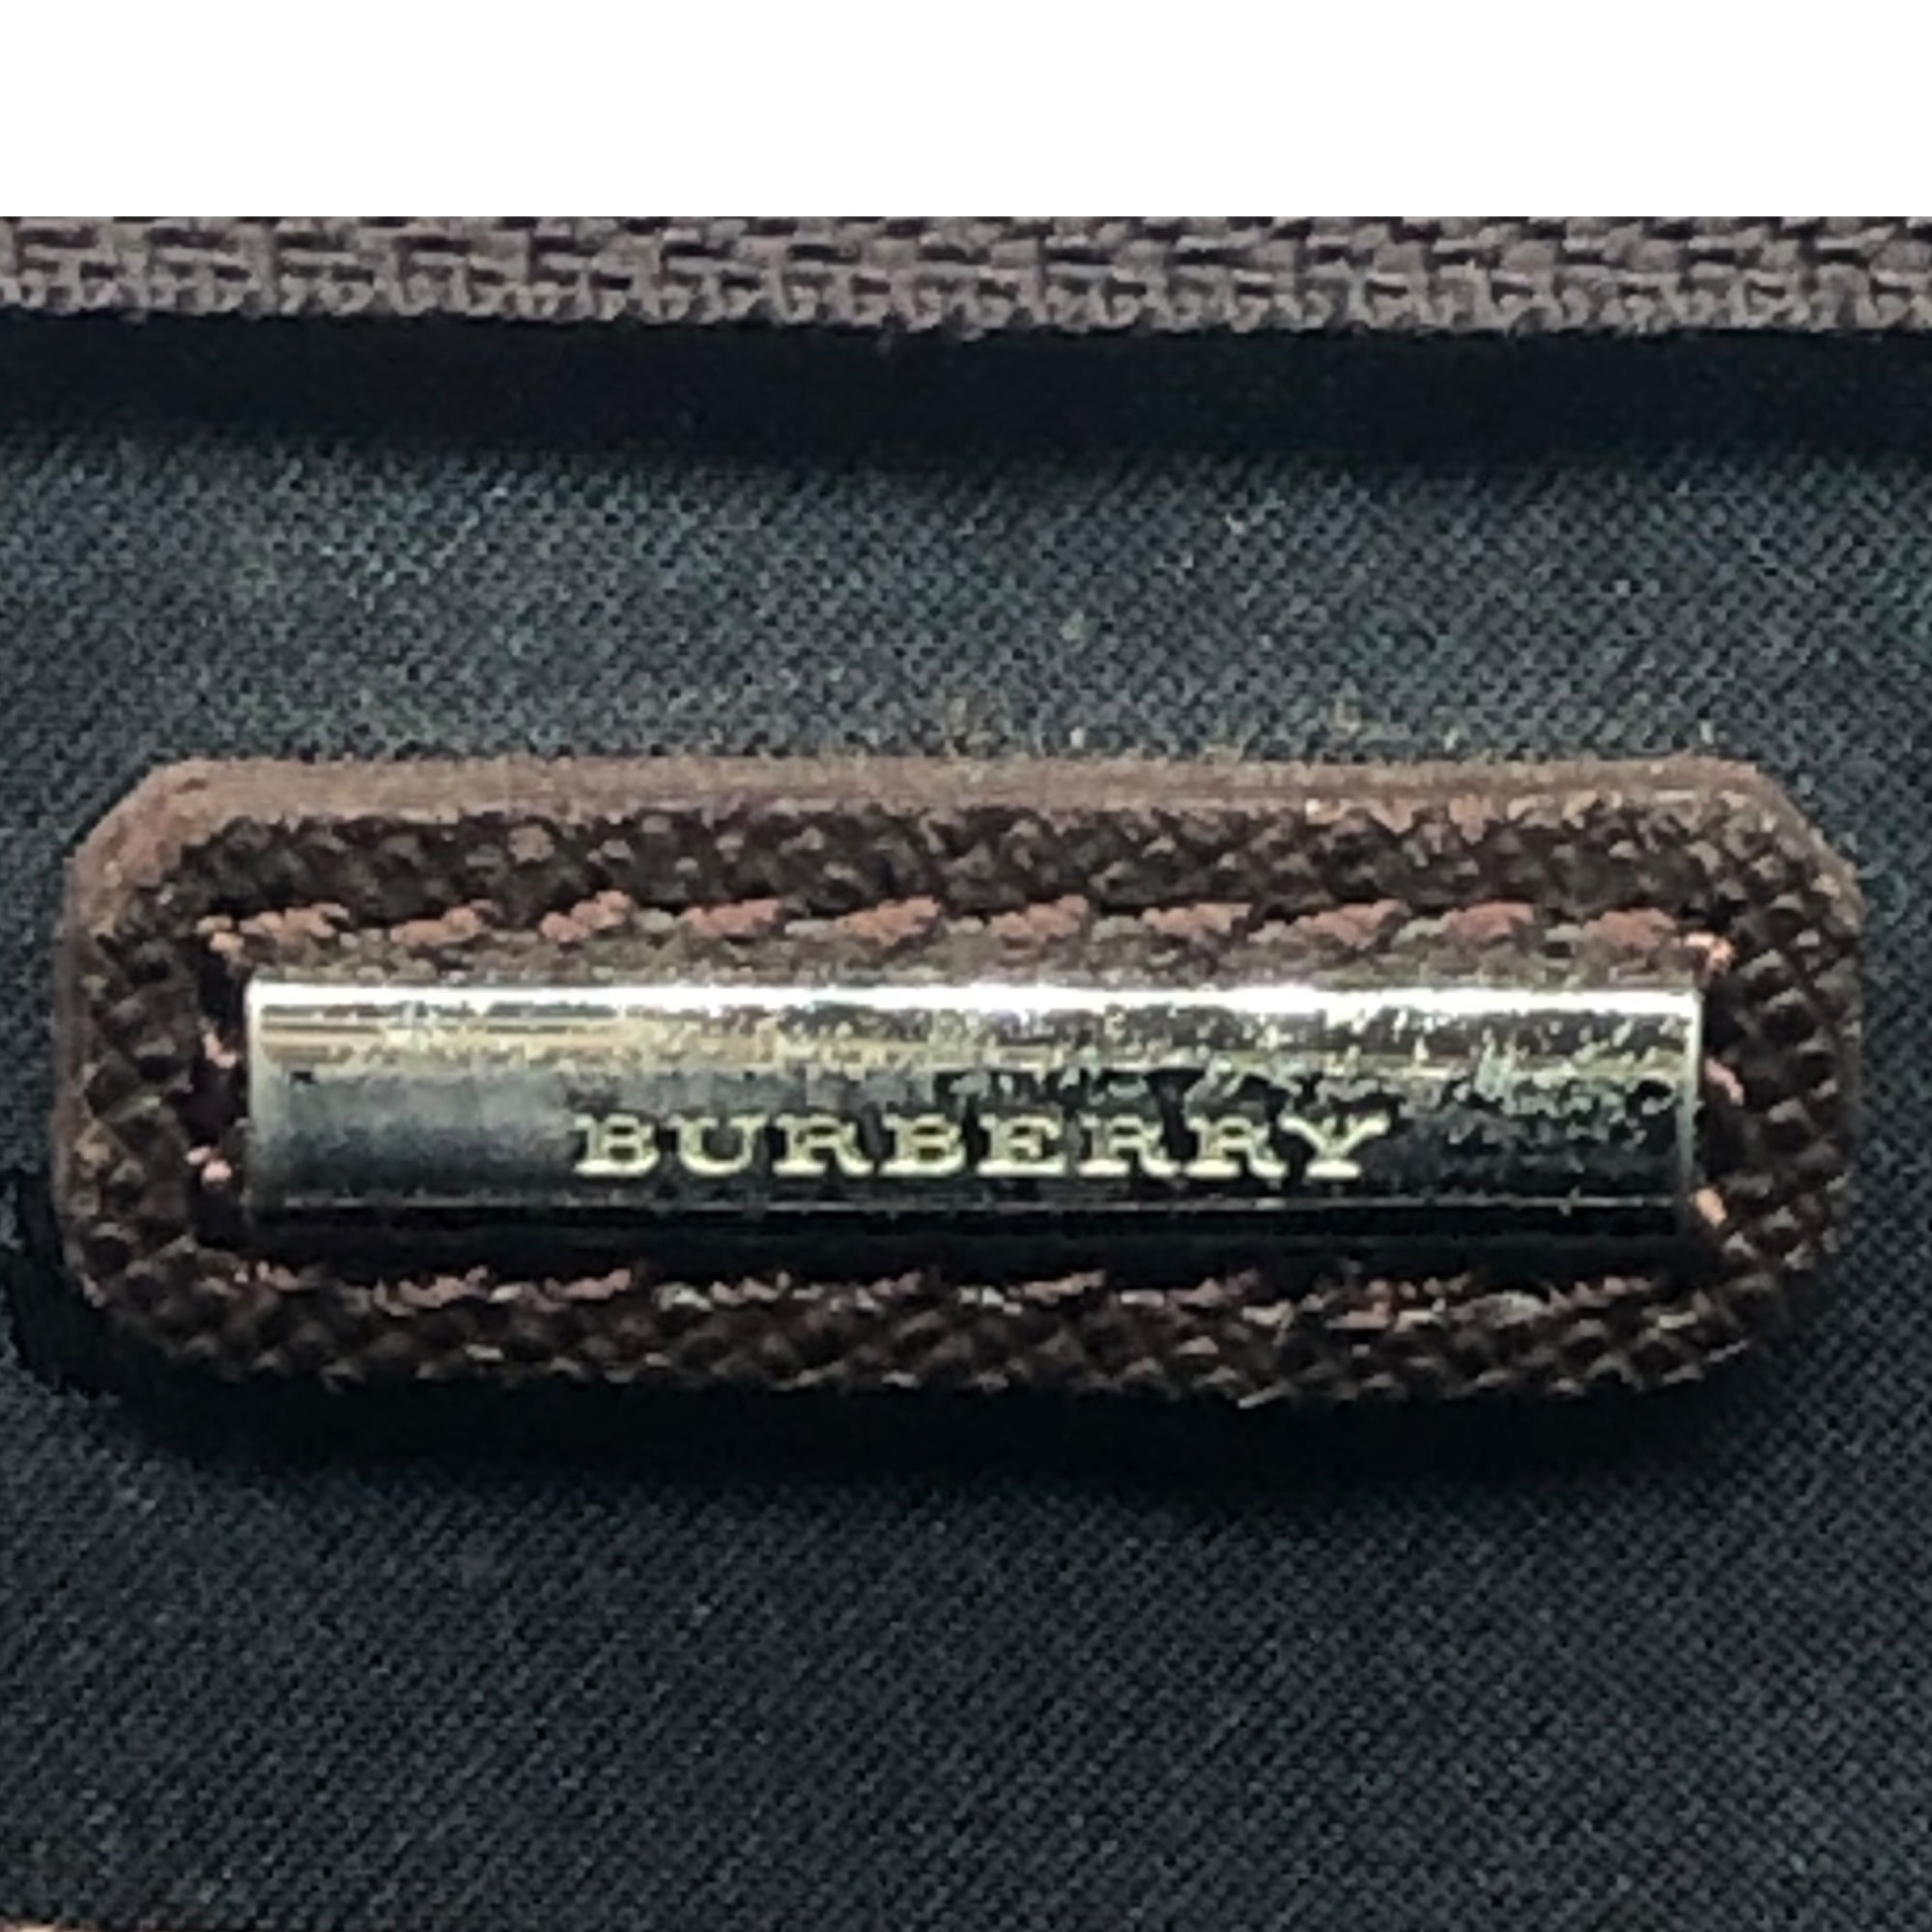 Burberrys(バーバリーズ) leather clutch bag レザー クラッチ バッグ ブラウン セカンド バッグ ポーチ ヴィンテージ